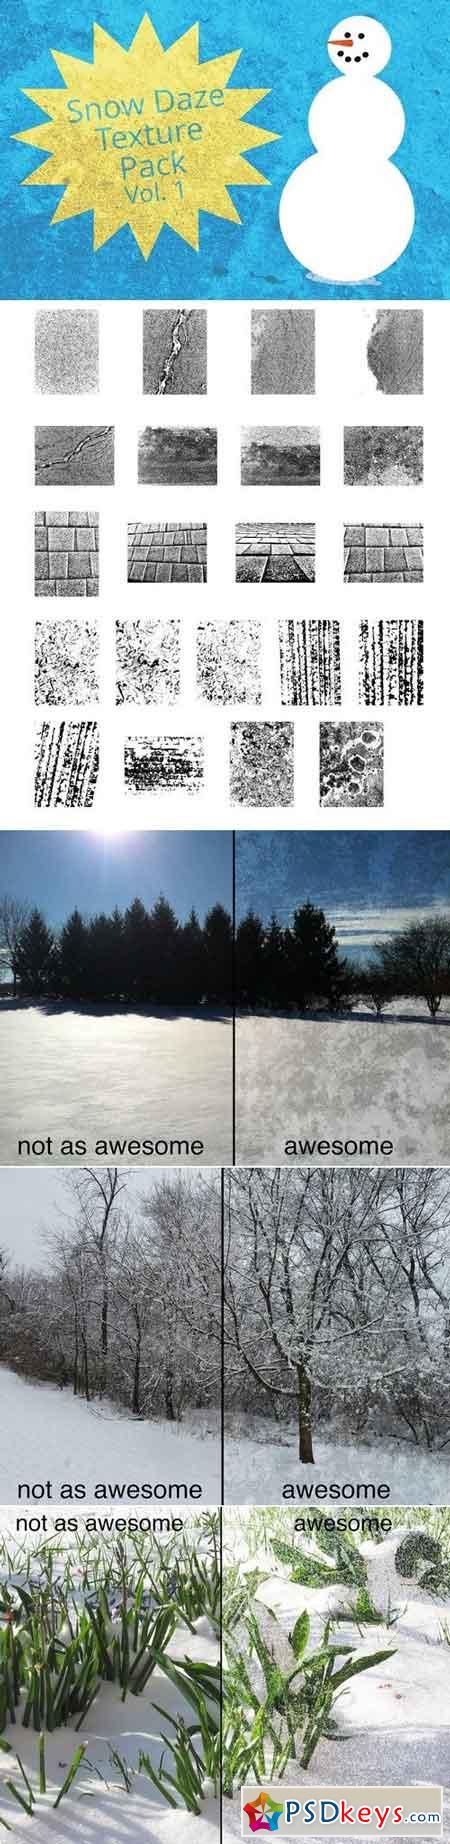 Snow Daze Vol. 1 Texture Pack 2195325